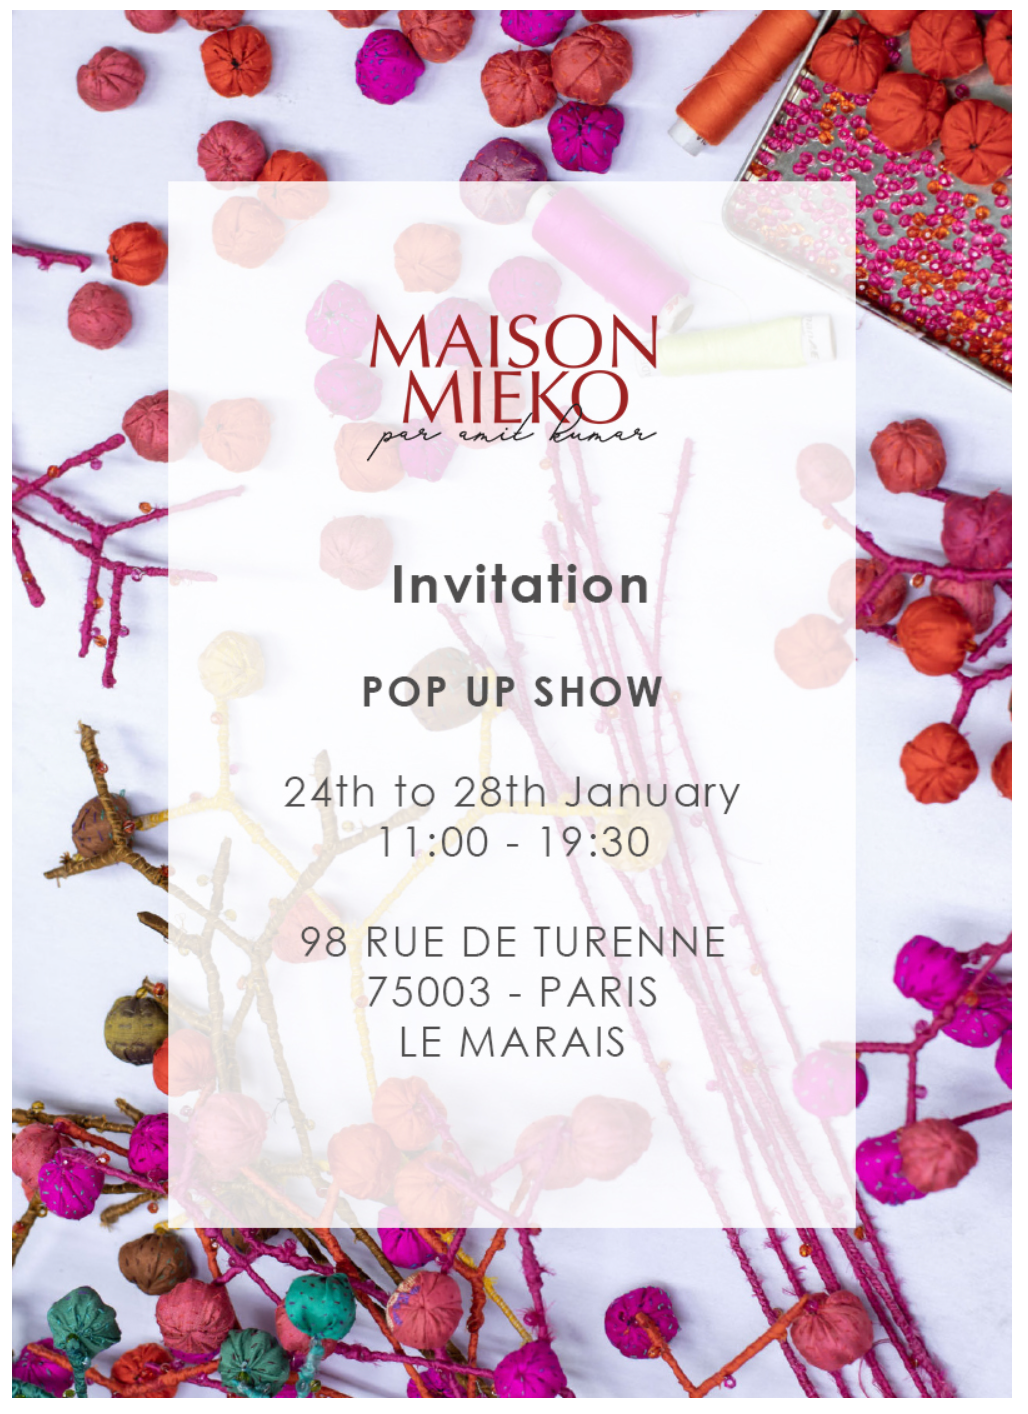 MAISON MIEKO Pop-Up Store in Paris - Mieko Mintz